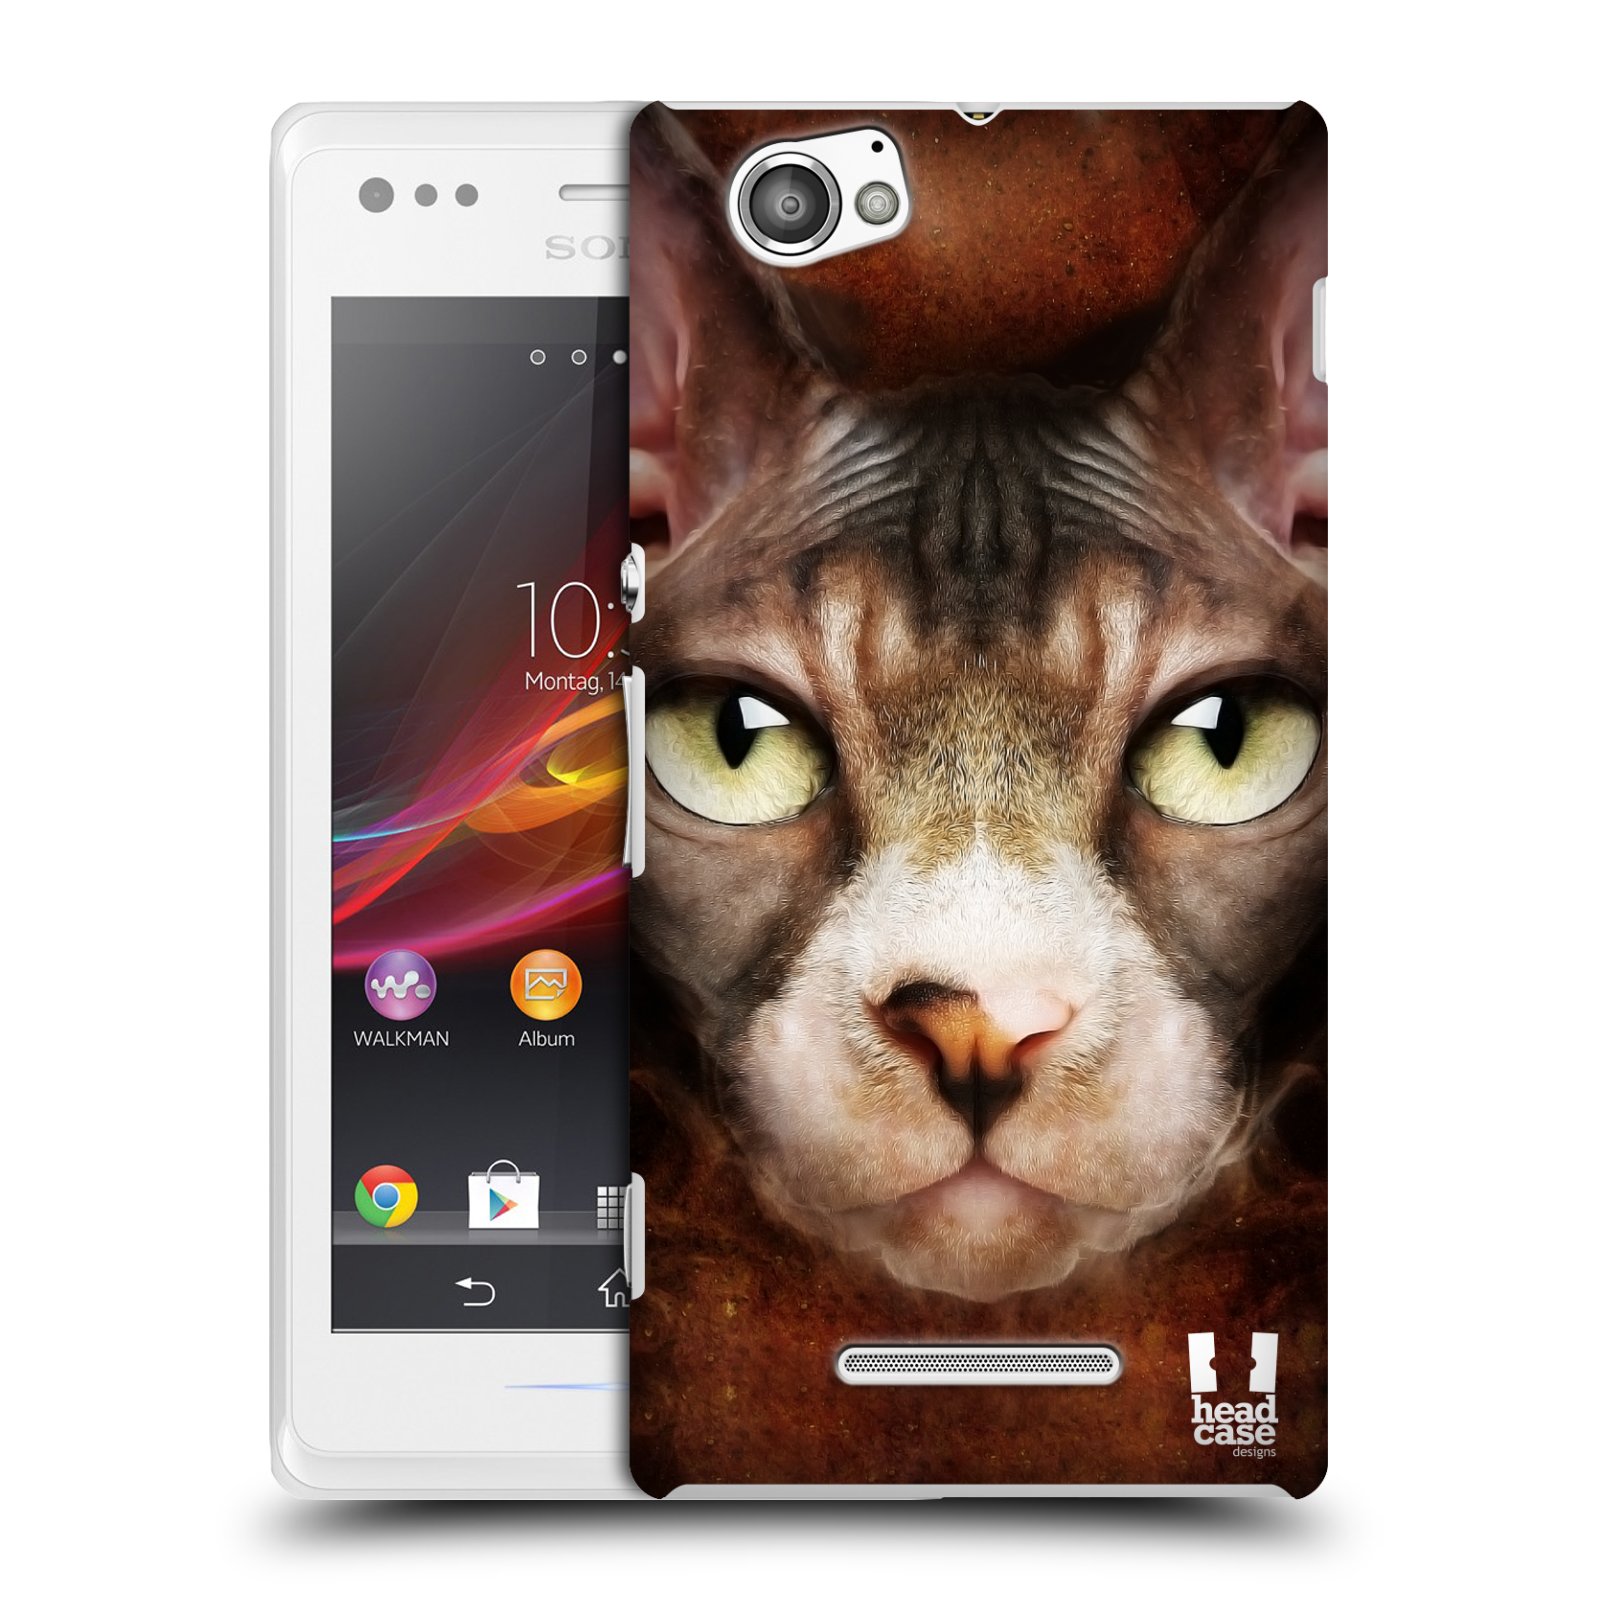 HEAD CASE plastový obal na mobil Sony Xperia M vzor Zvířecí tváře kočka sphynx